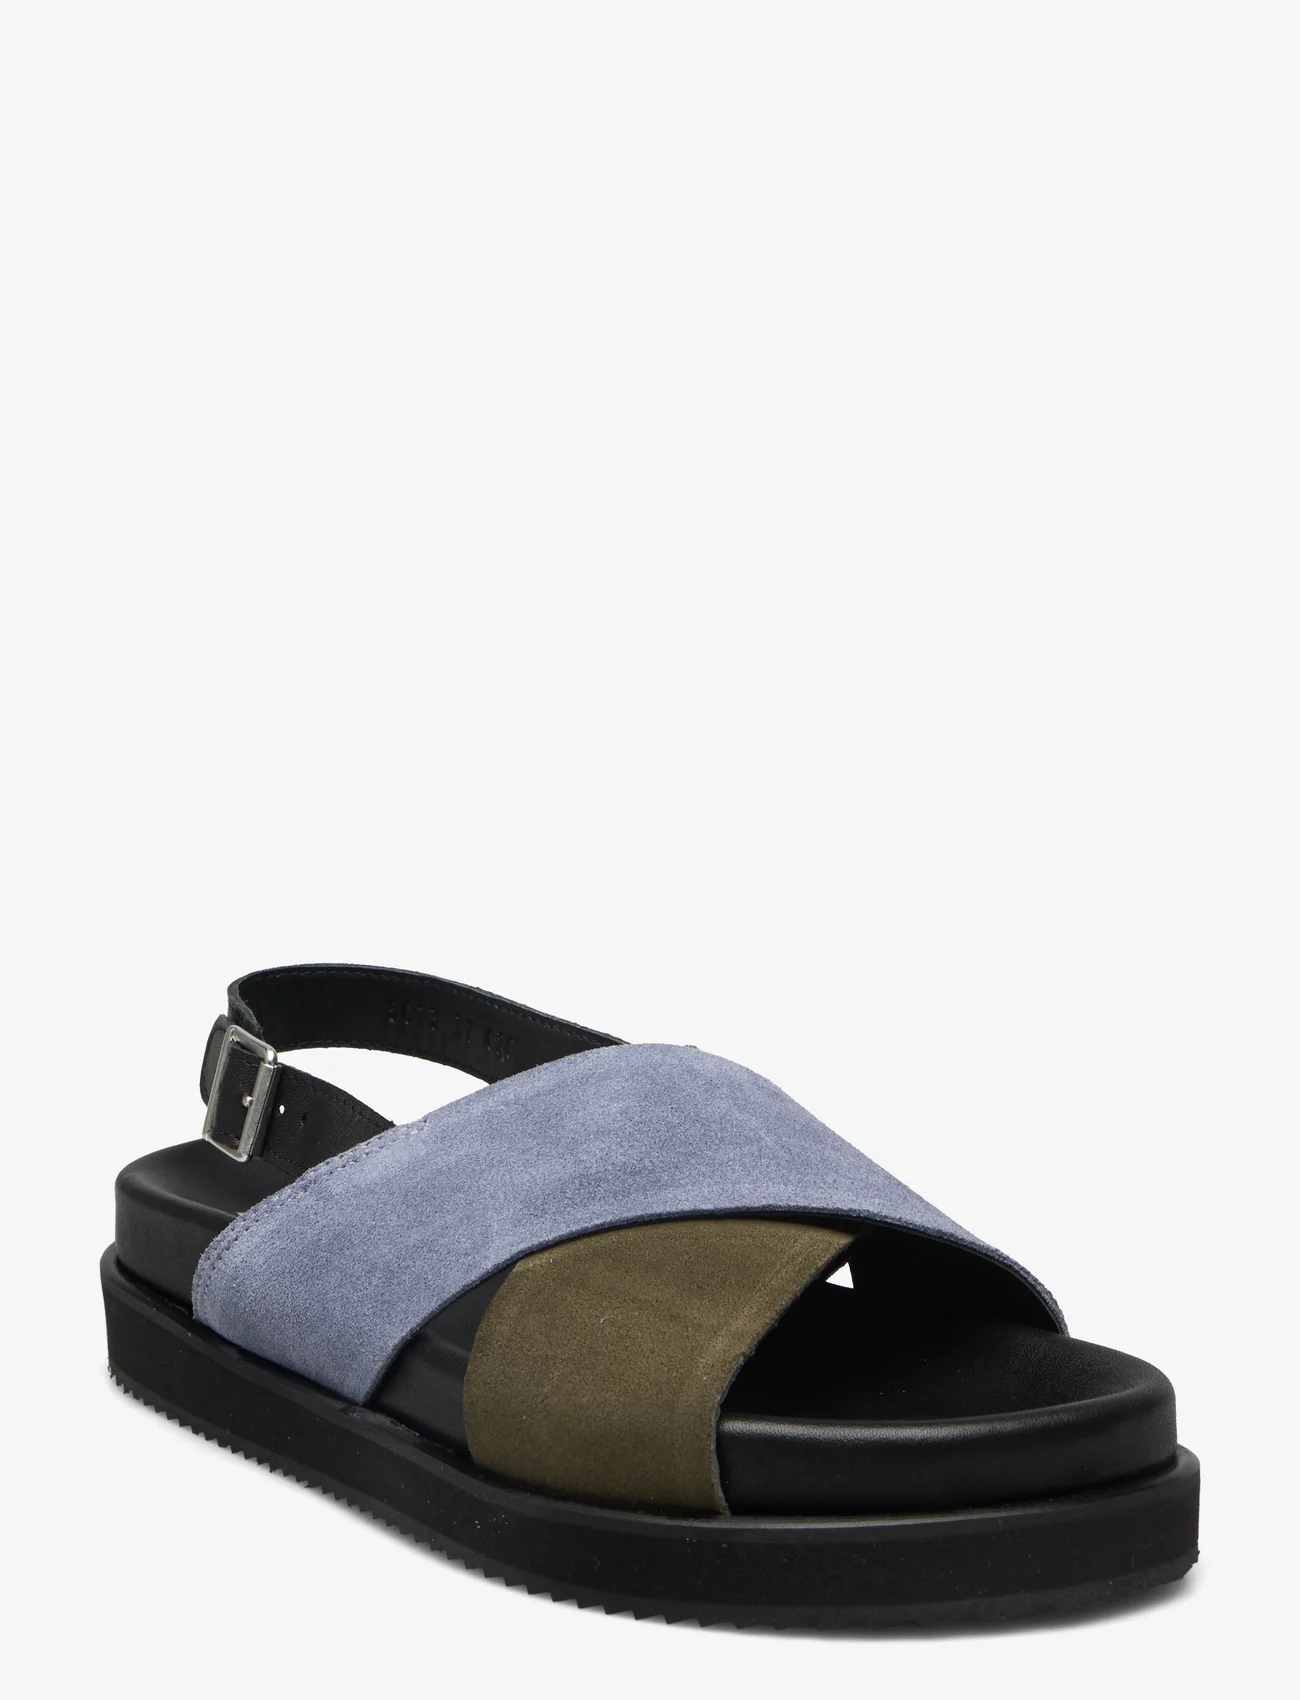 ANGULUS - Sandals - flat - open toe - op - flache sandalen - 1604/2244/2242 black/green/lig - 0